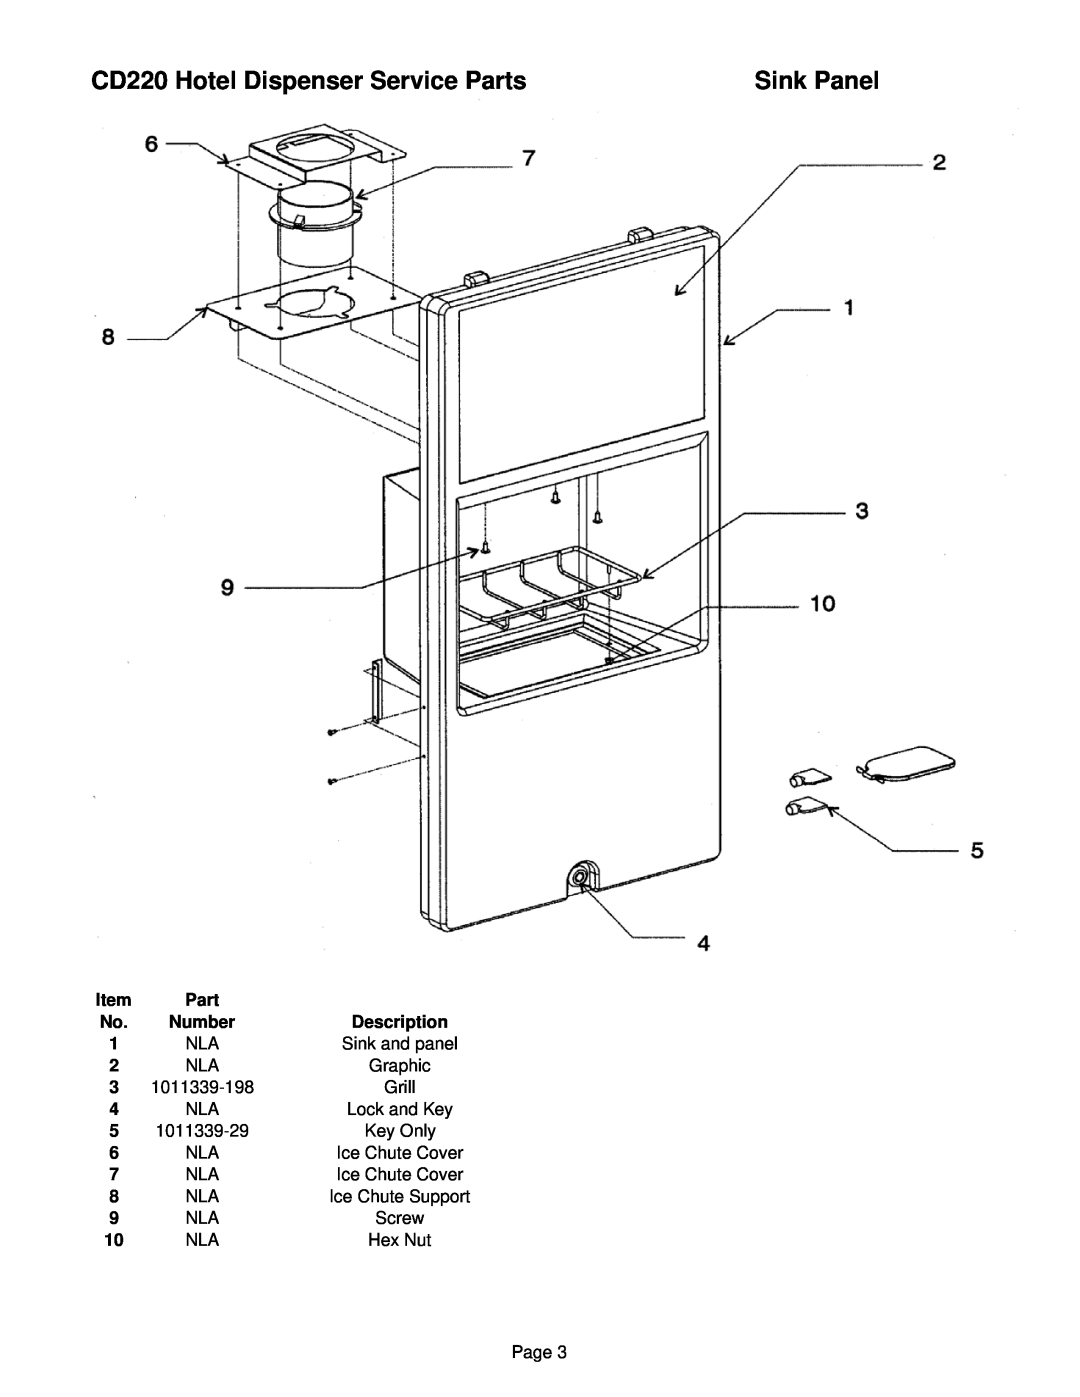 Ice-O-Matic manual Sink Panel, CD220 Hotel Dispenser Service Parts, Number, Description 